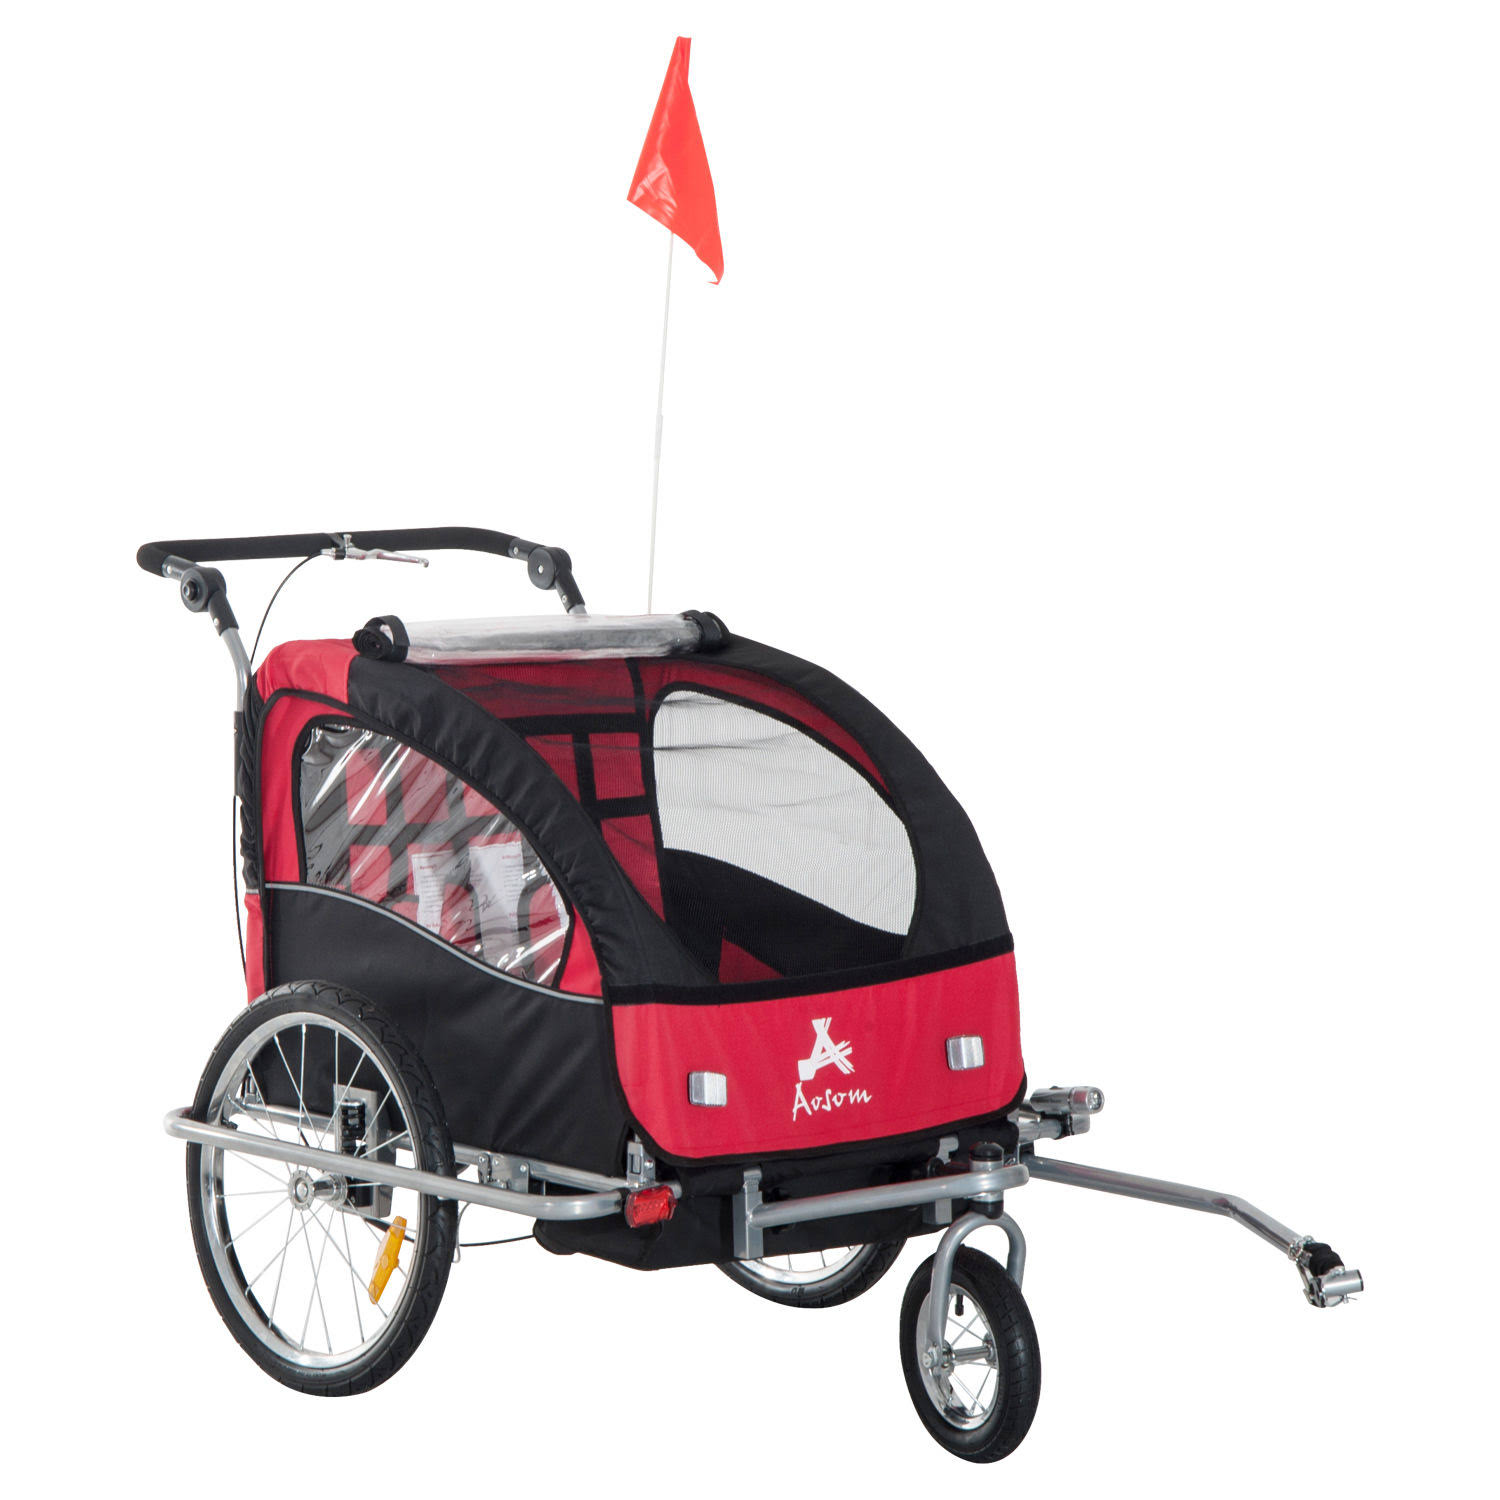 Aosom Elite II 3in1 Double Child Bike Trailer and Stroller – Red / Black